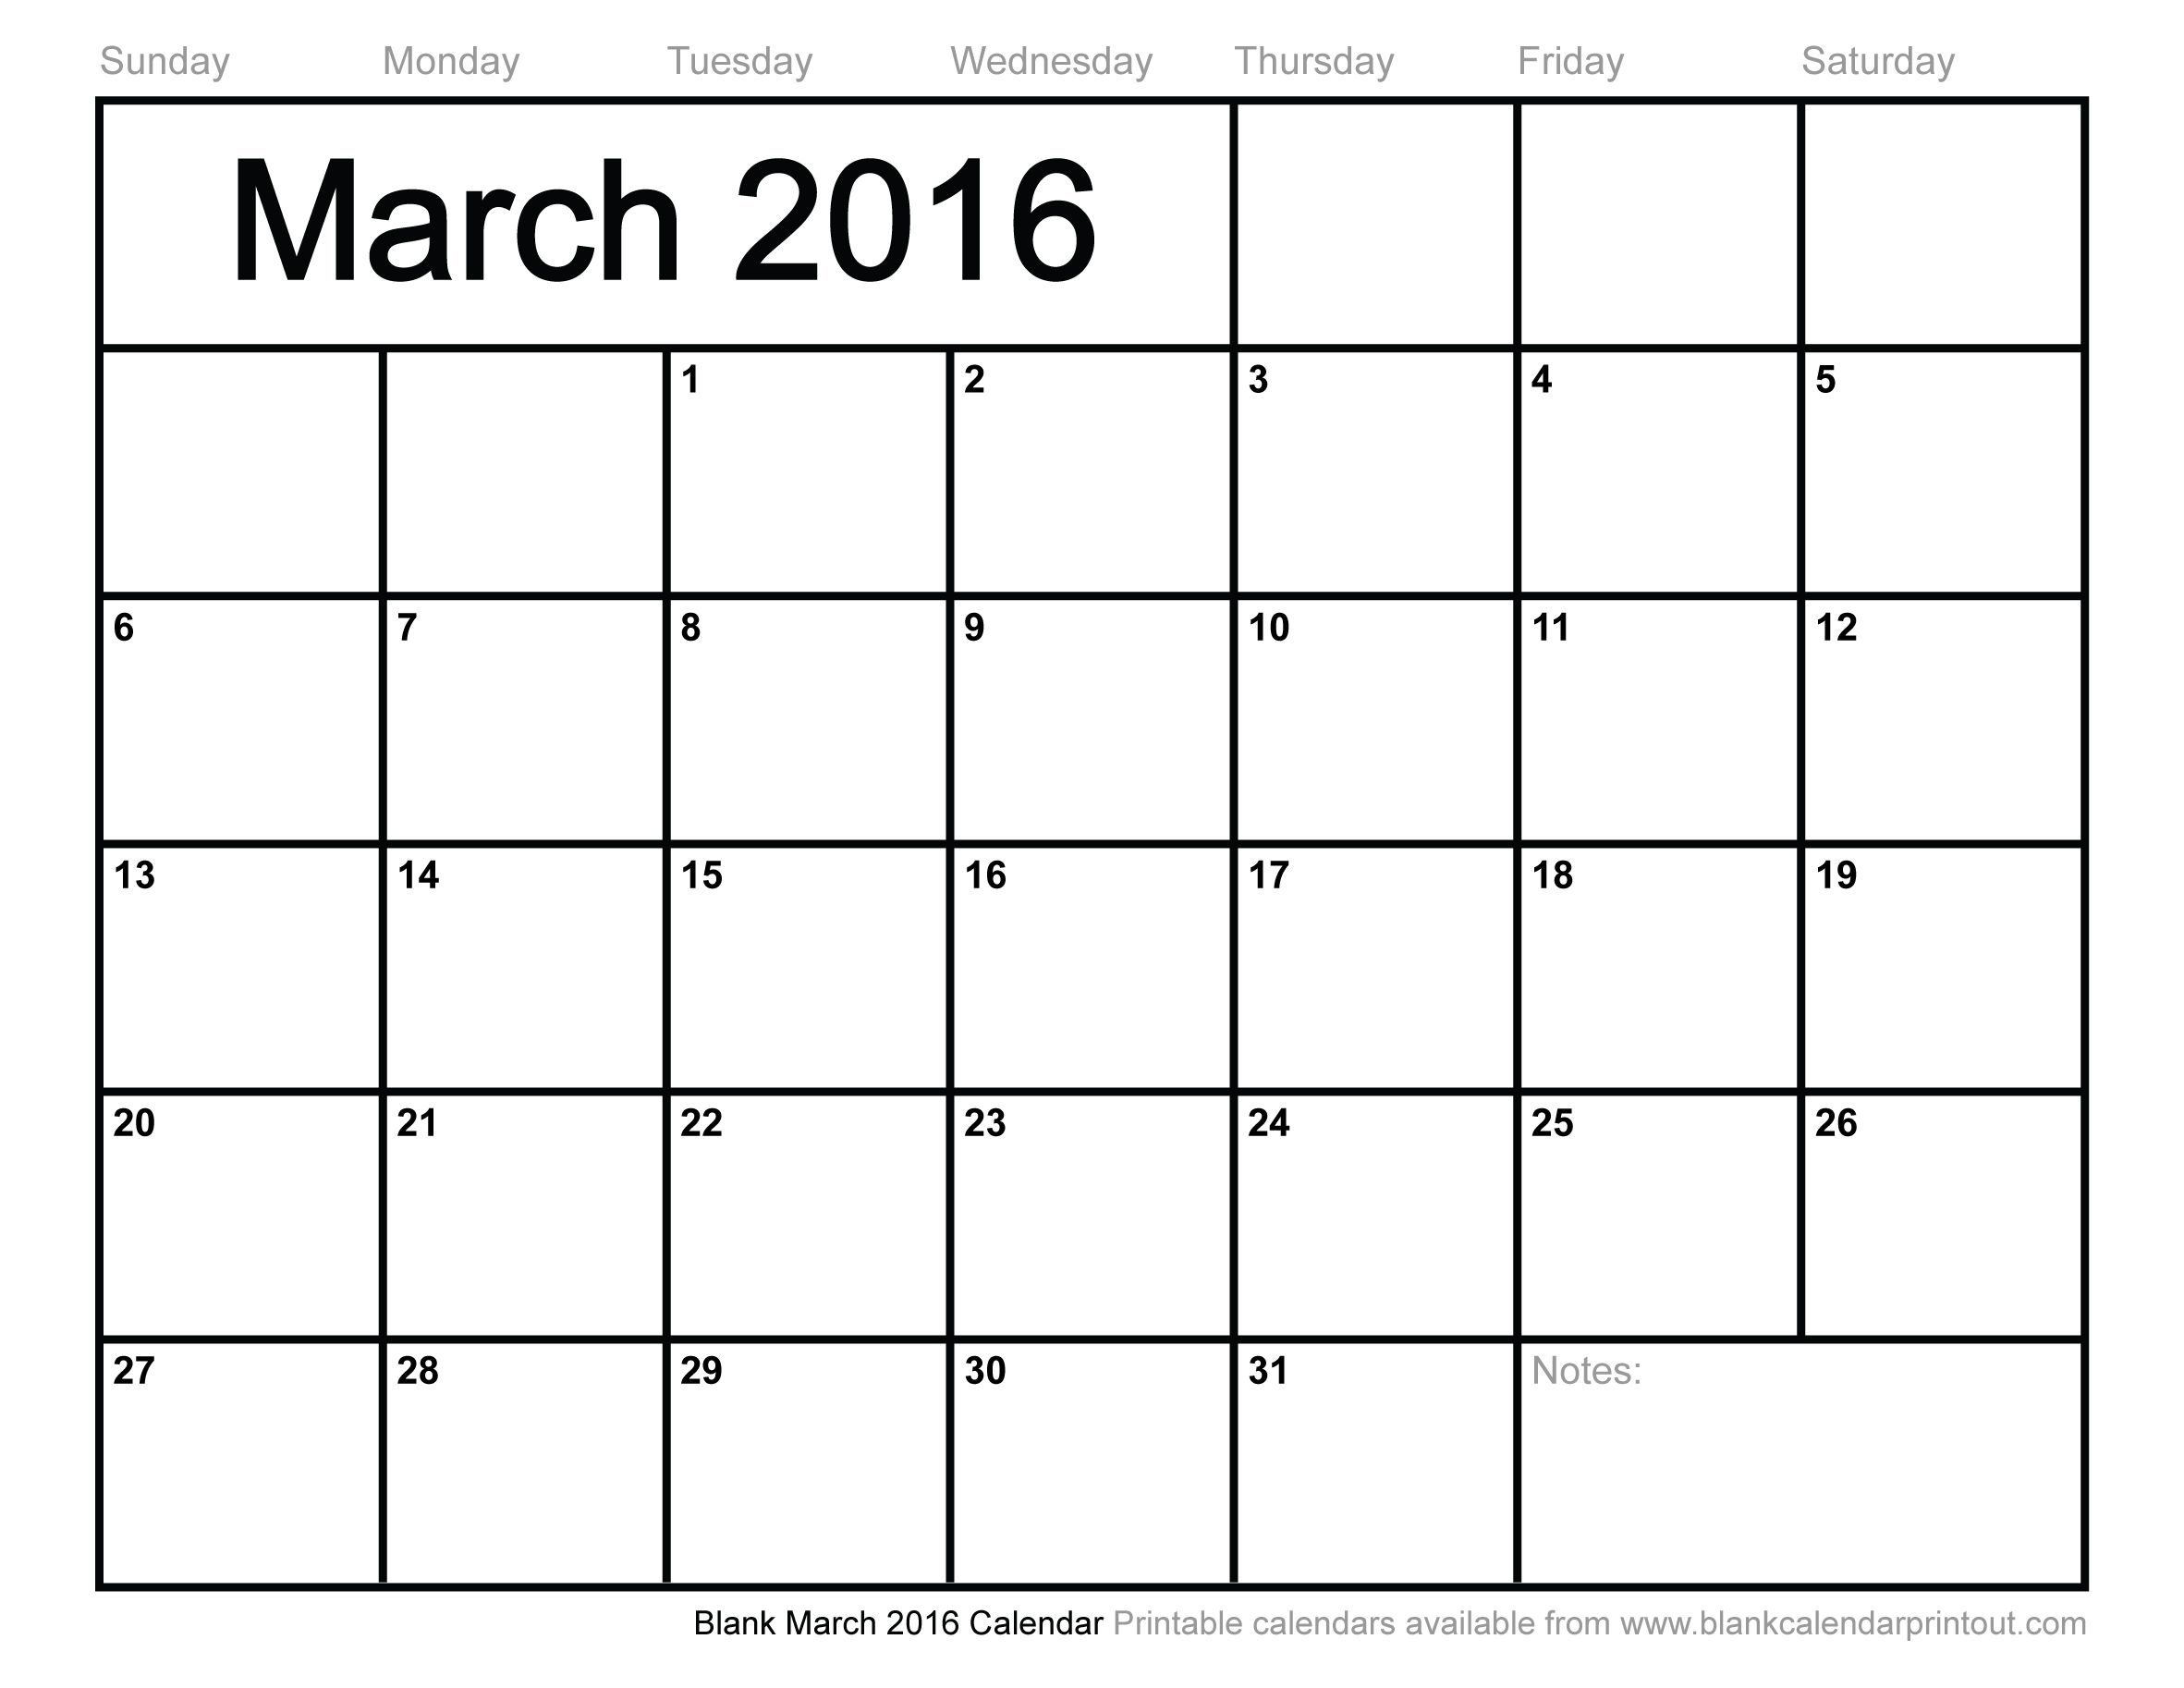 free-download-march-calendar-2016-blank-march-2016-calendarjpg